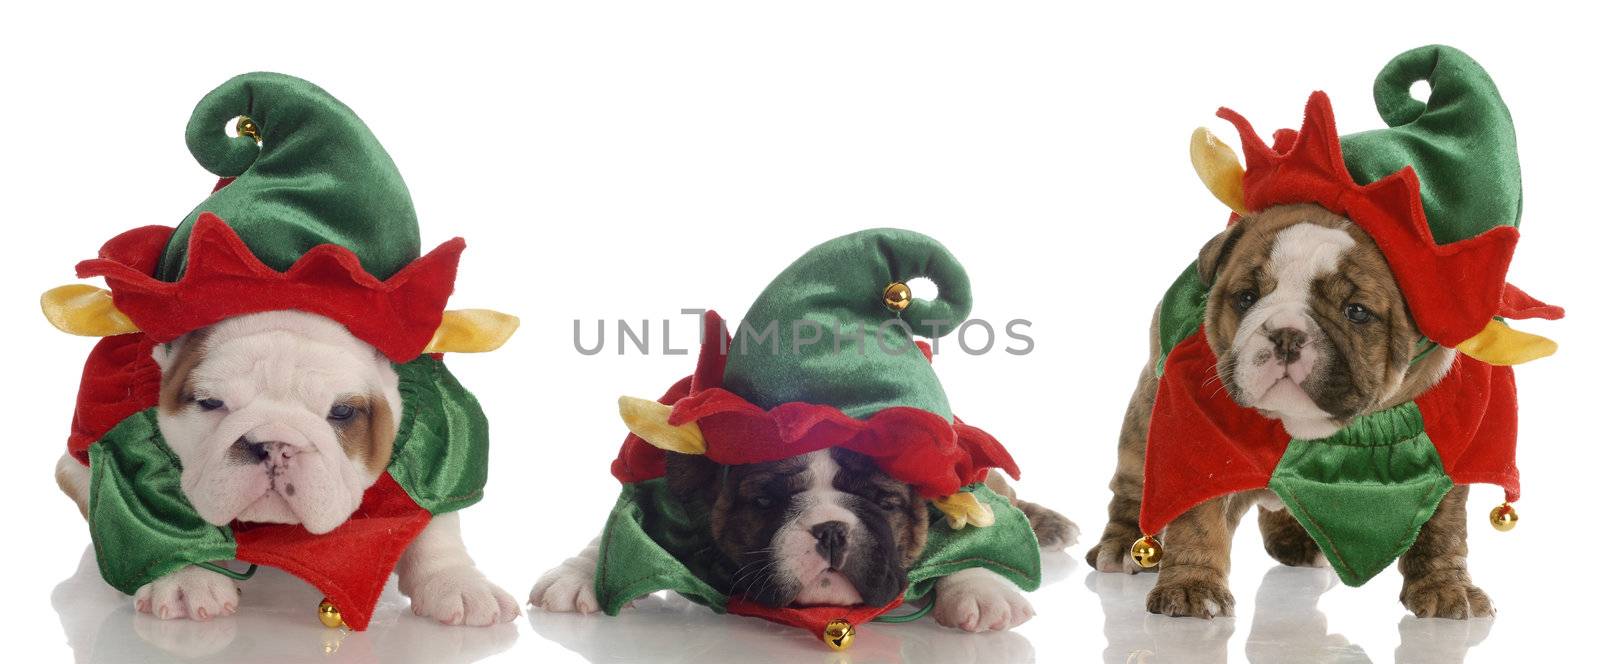 santa's helpers - three english bulldog puppies dressed up as elves